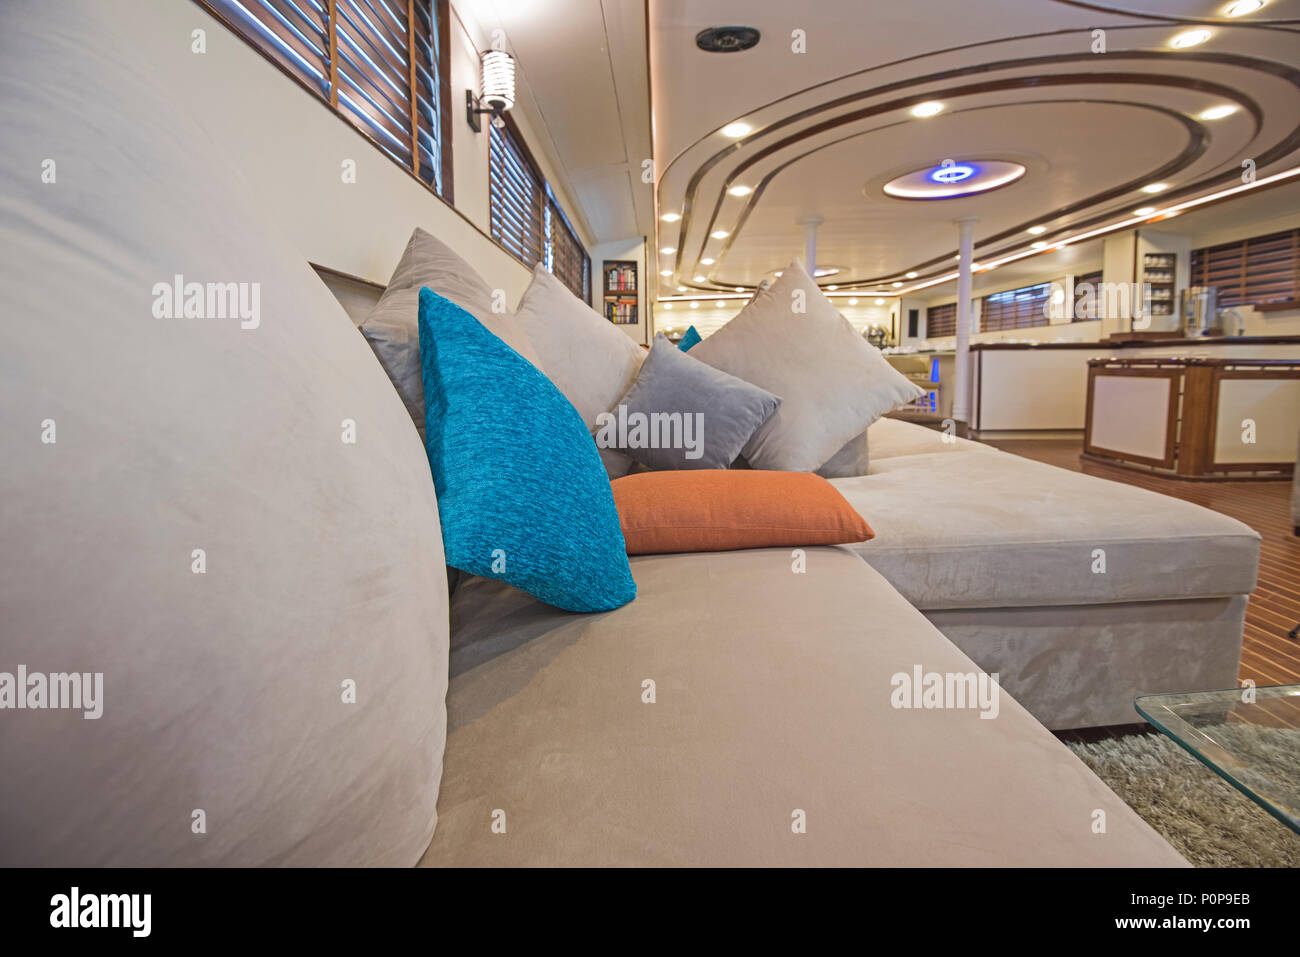 Interior design furnishing decor of the salon area in a large luxury motor yacht Stock Photo